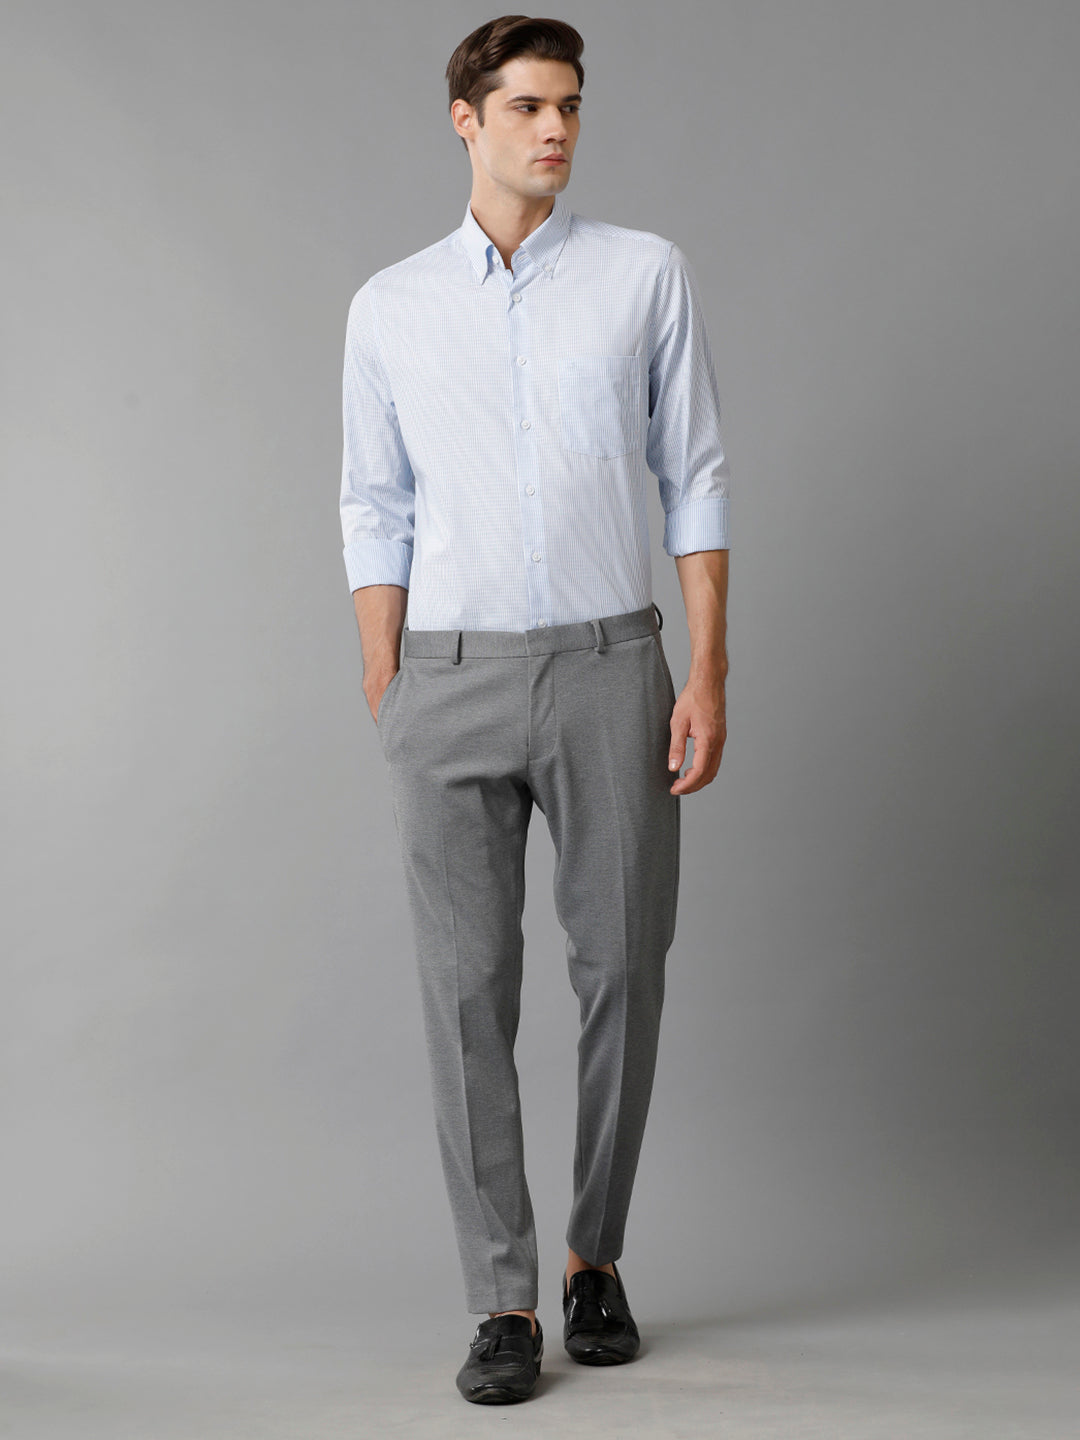 Aldeno Mens Slim Fit Vertical Stripes Blue Formal Cotton Shirt (CHEVY)